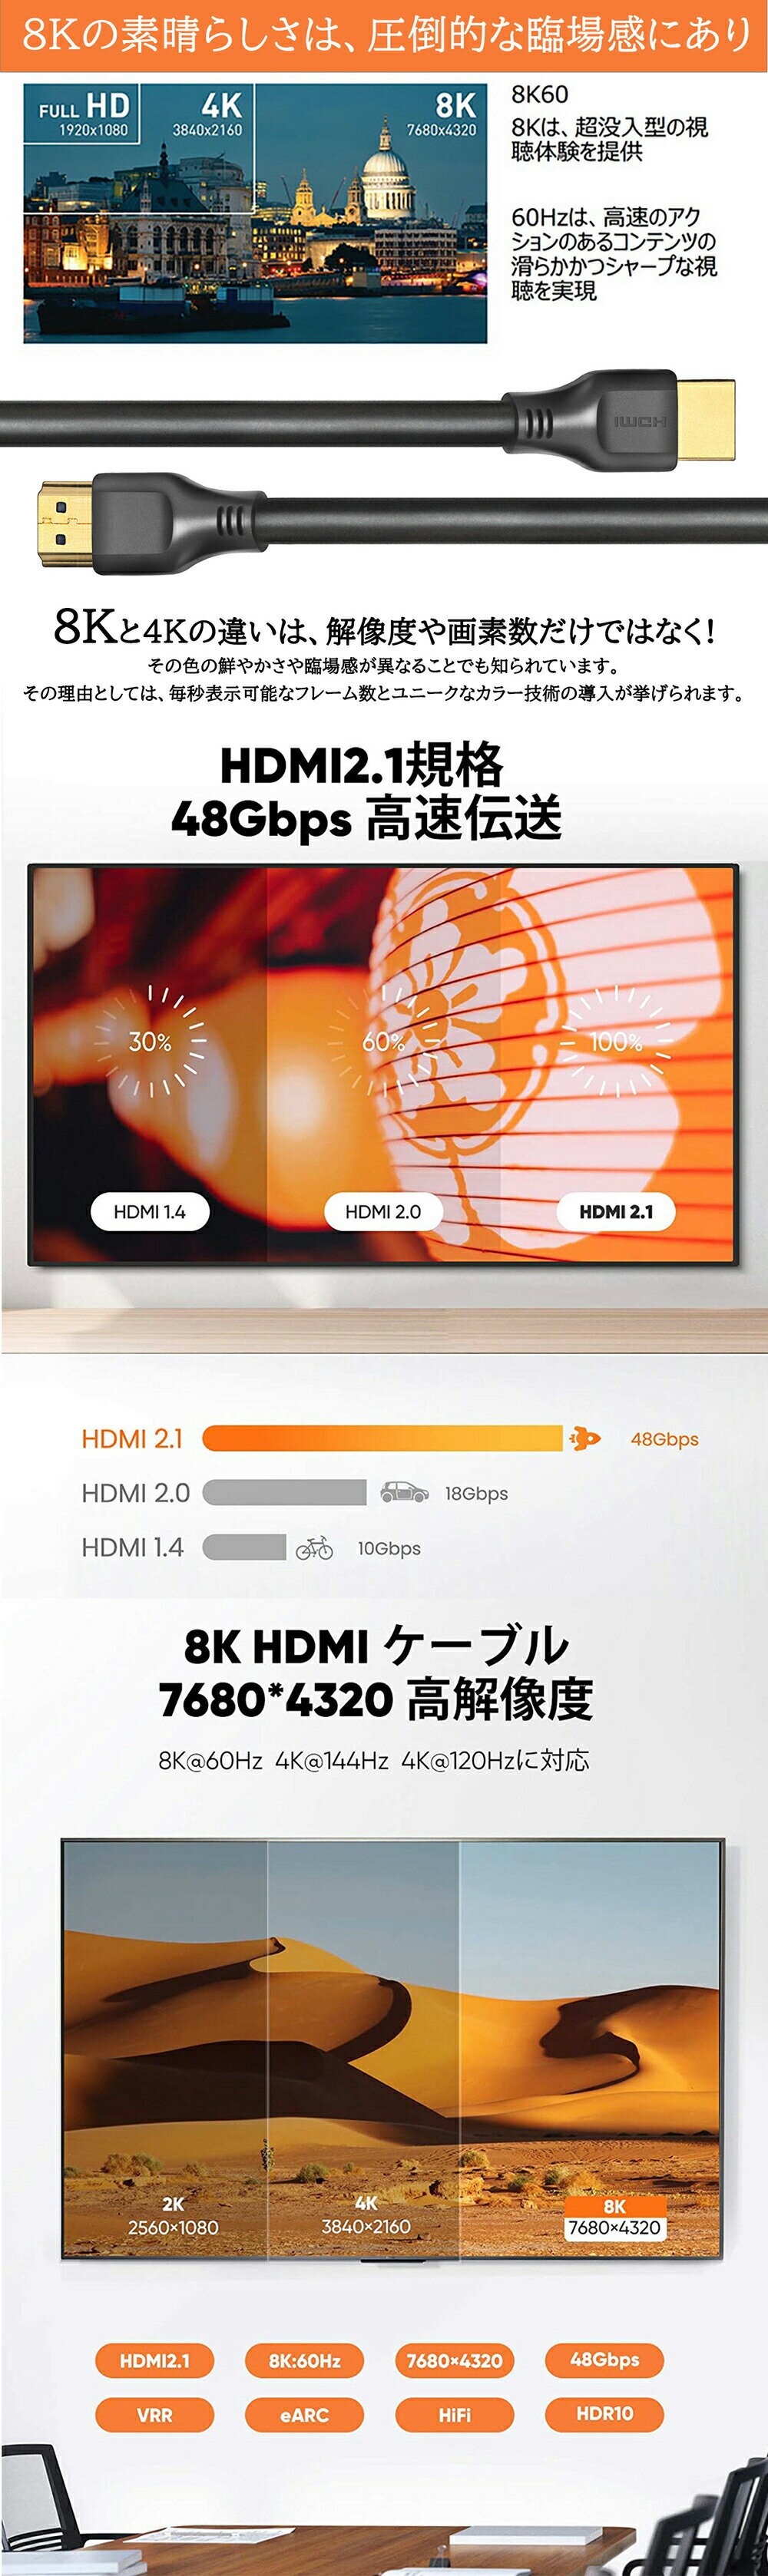 858shop HDMI 2.1 ケーブル 3m HDMIケーブ